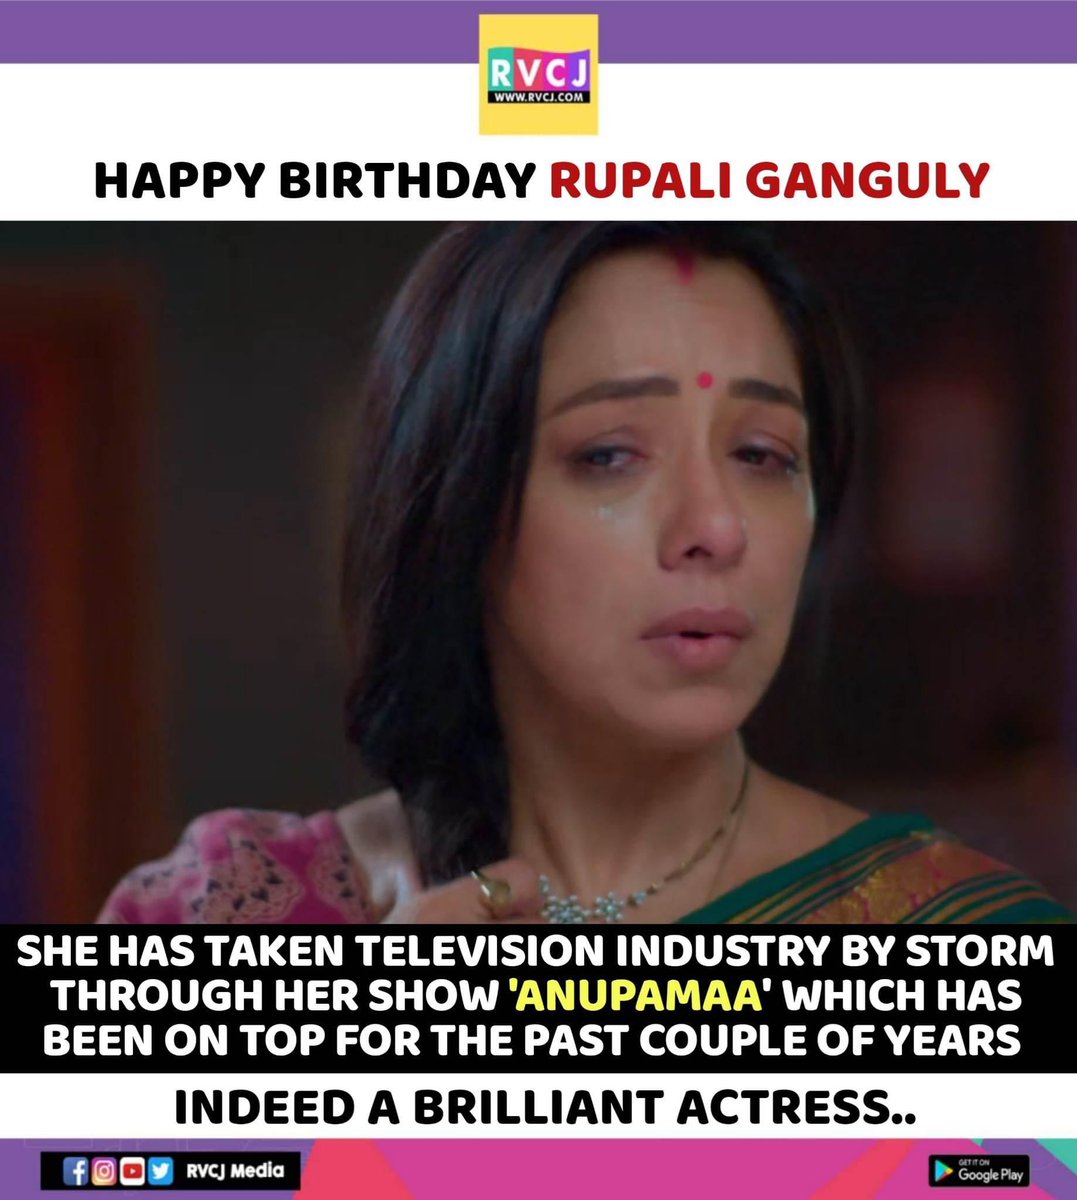 Happy Birthday @TheRupali 

#rupaliganguly #anupamaa #tvshow #tvactress #rvcjmovies